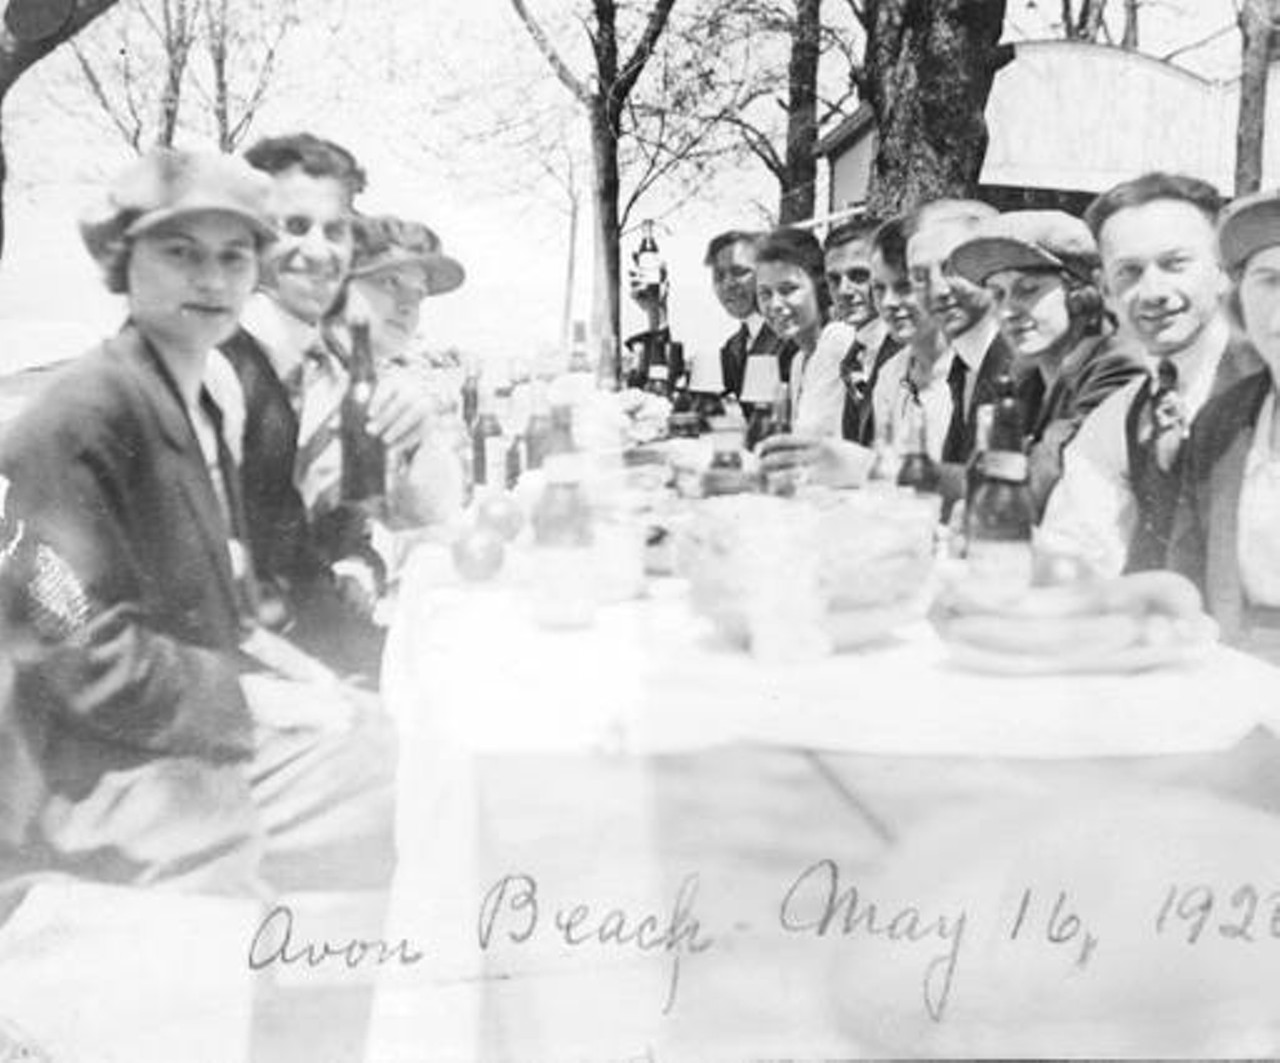 Party of men and women enjoying a picnic at Avon Beach, May 16, 1920